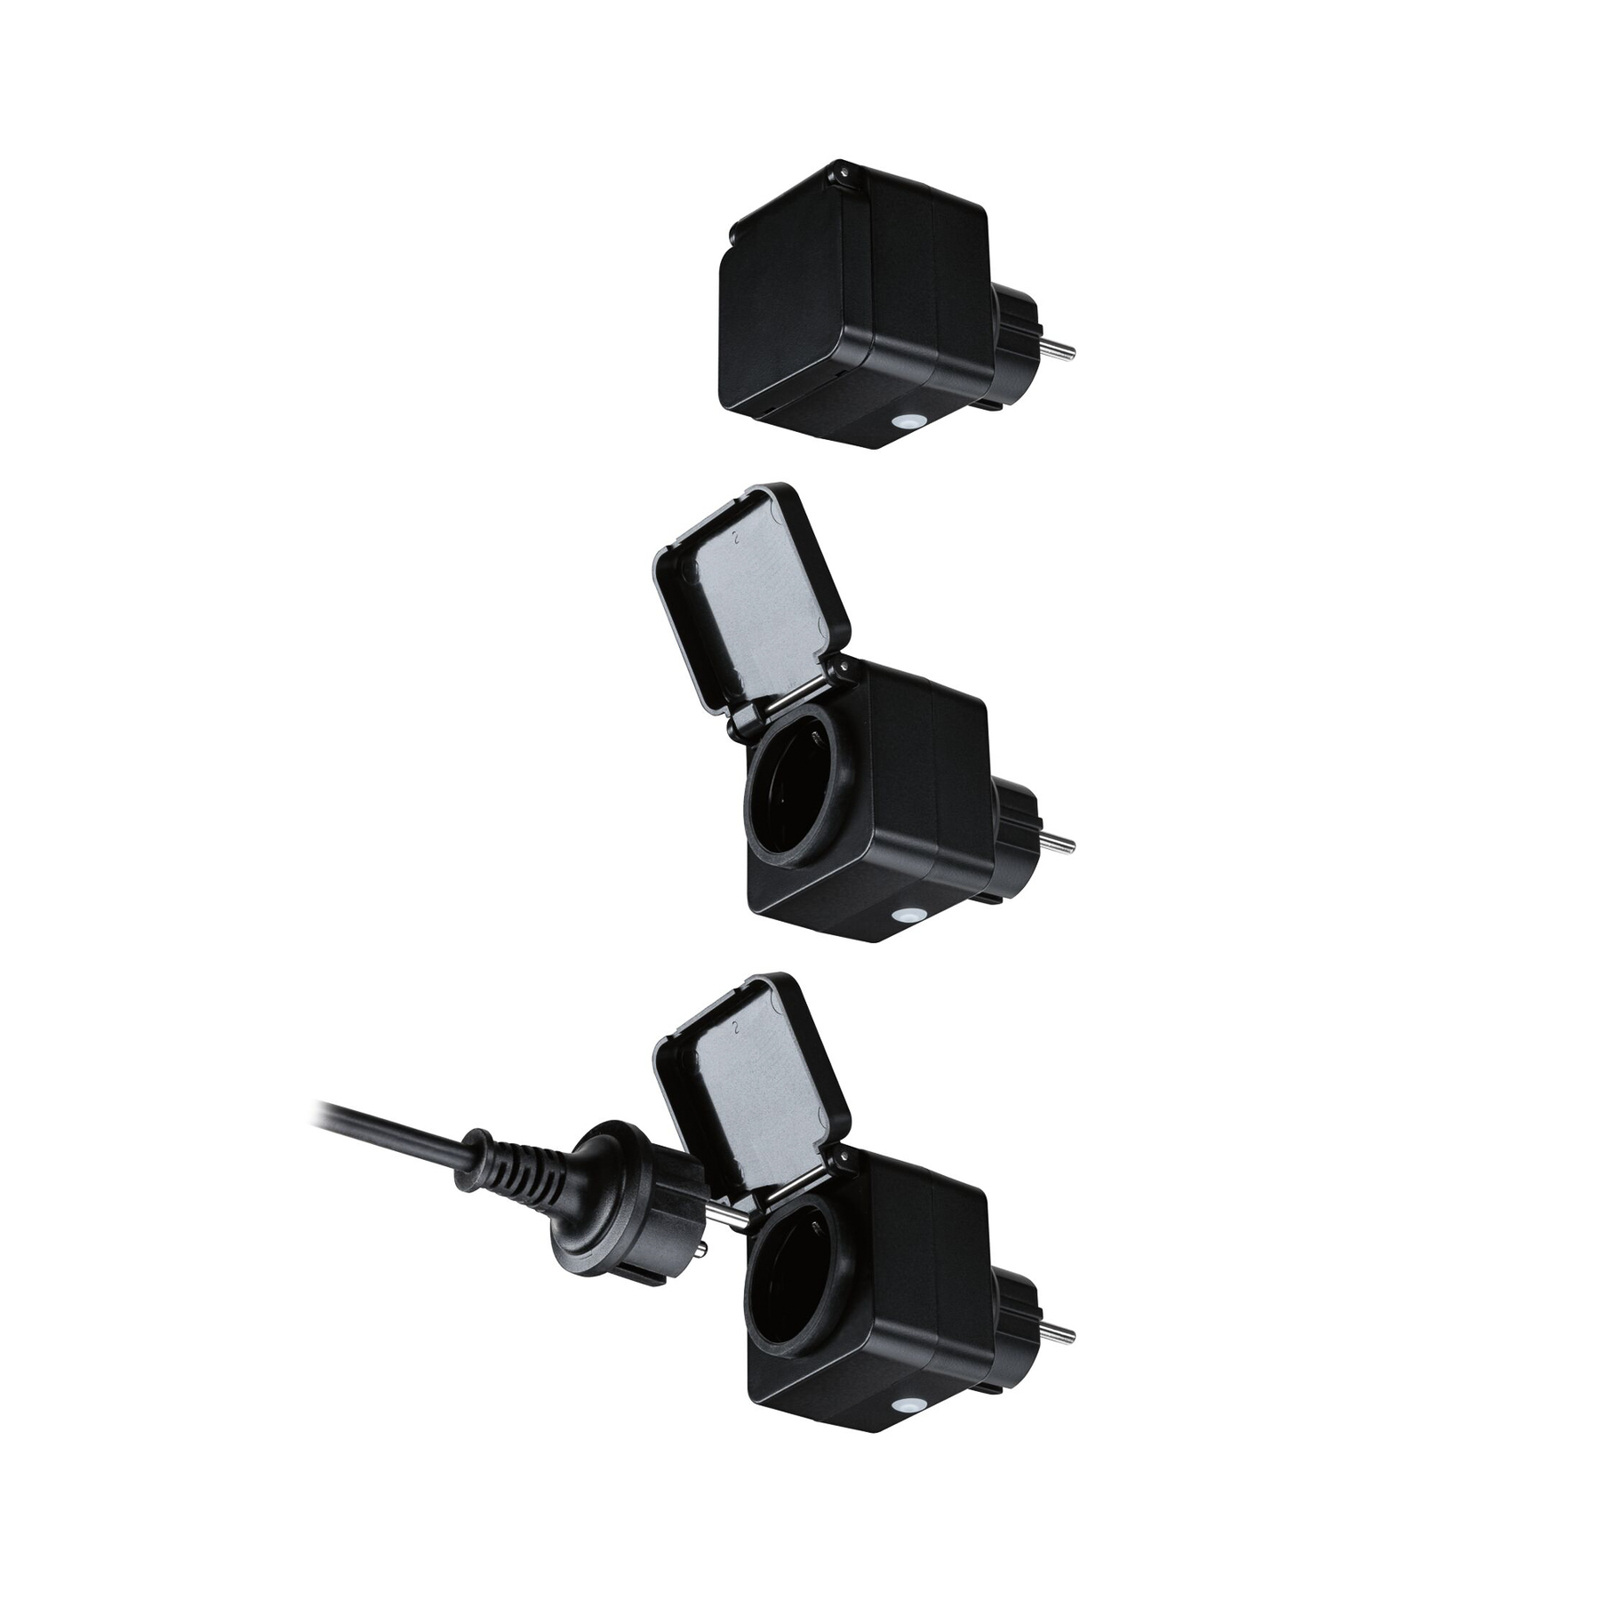 Paulmann Smart Plug Outdoor ZigBee adapterstekker